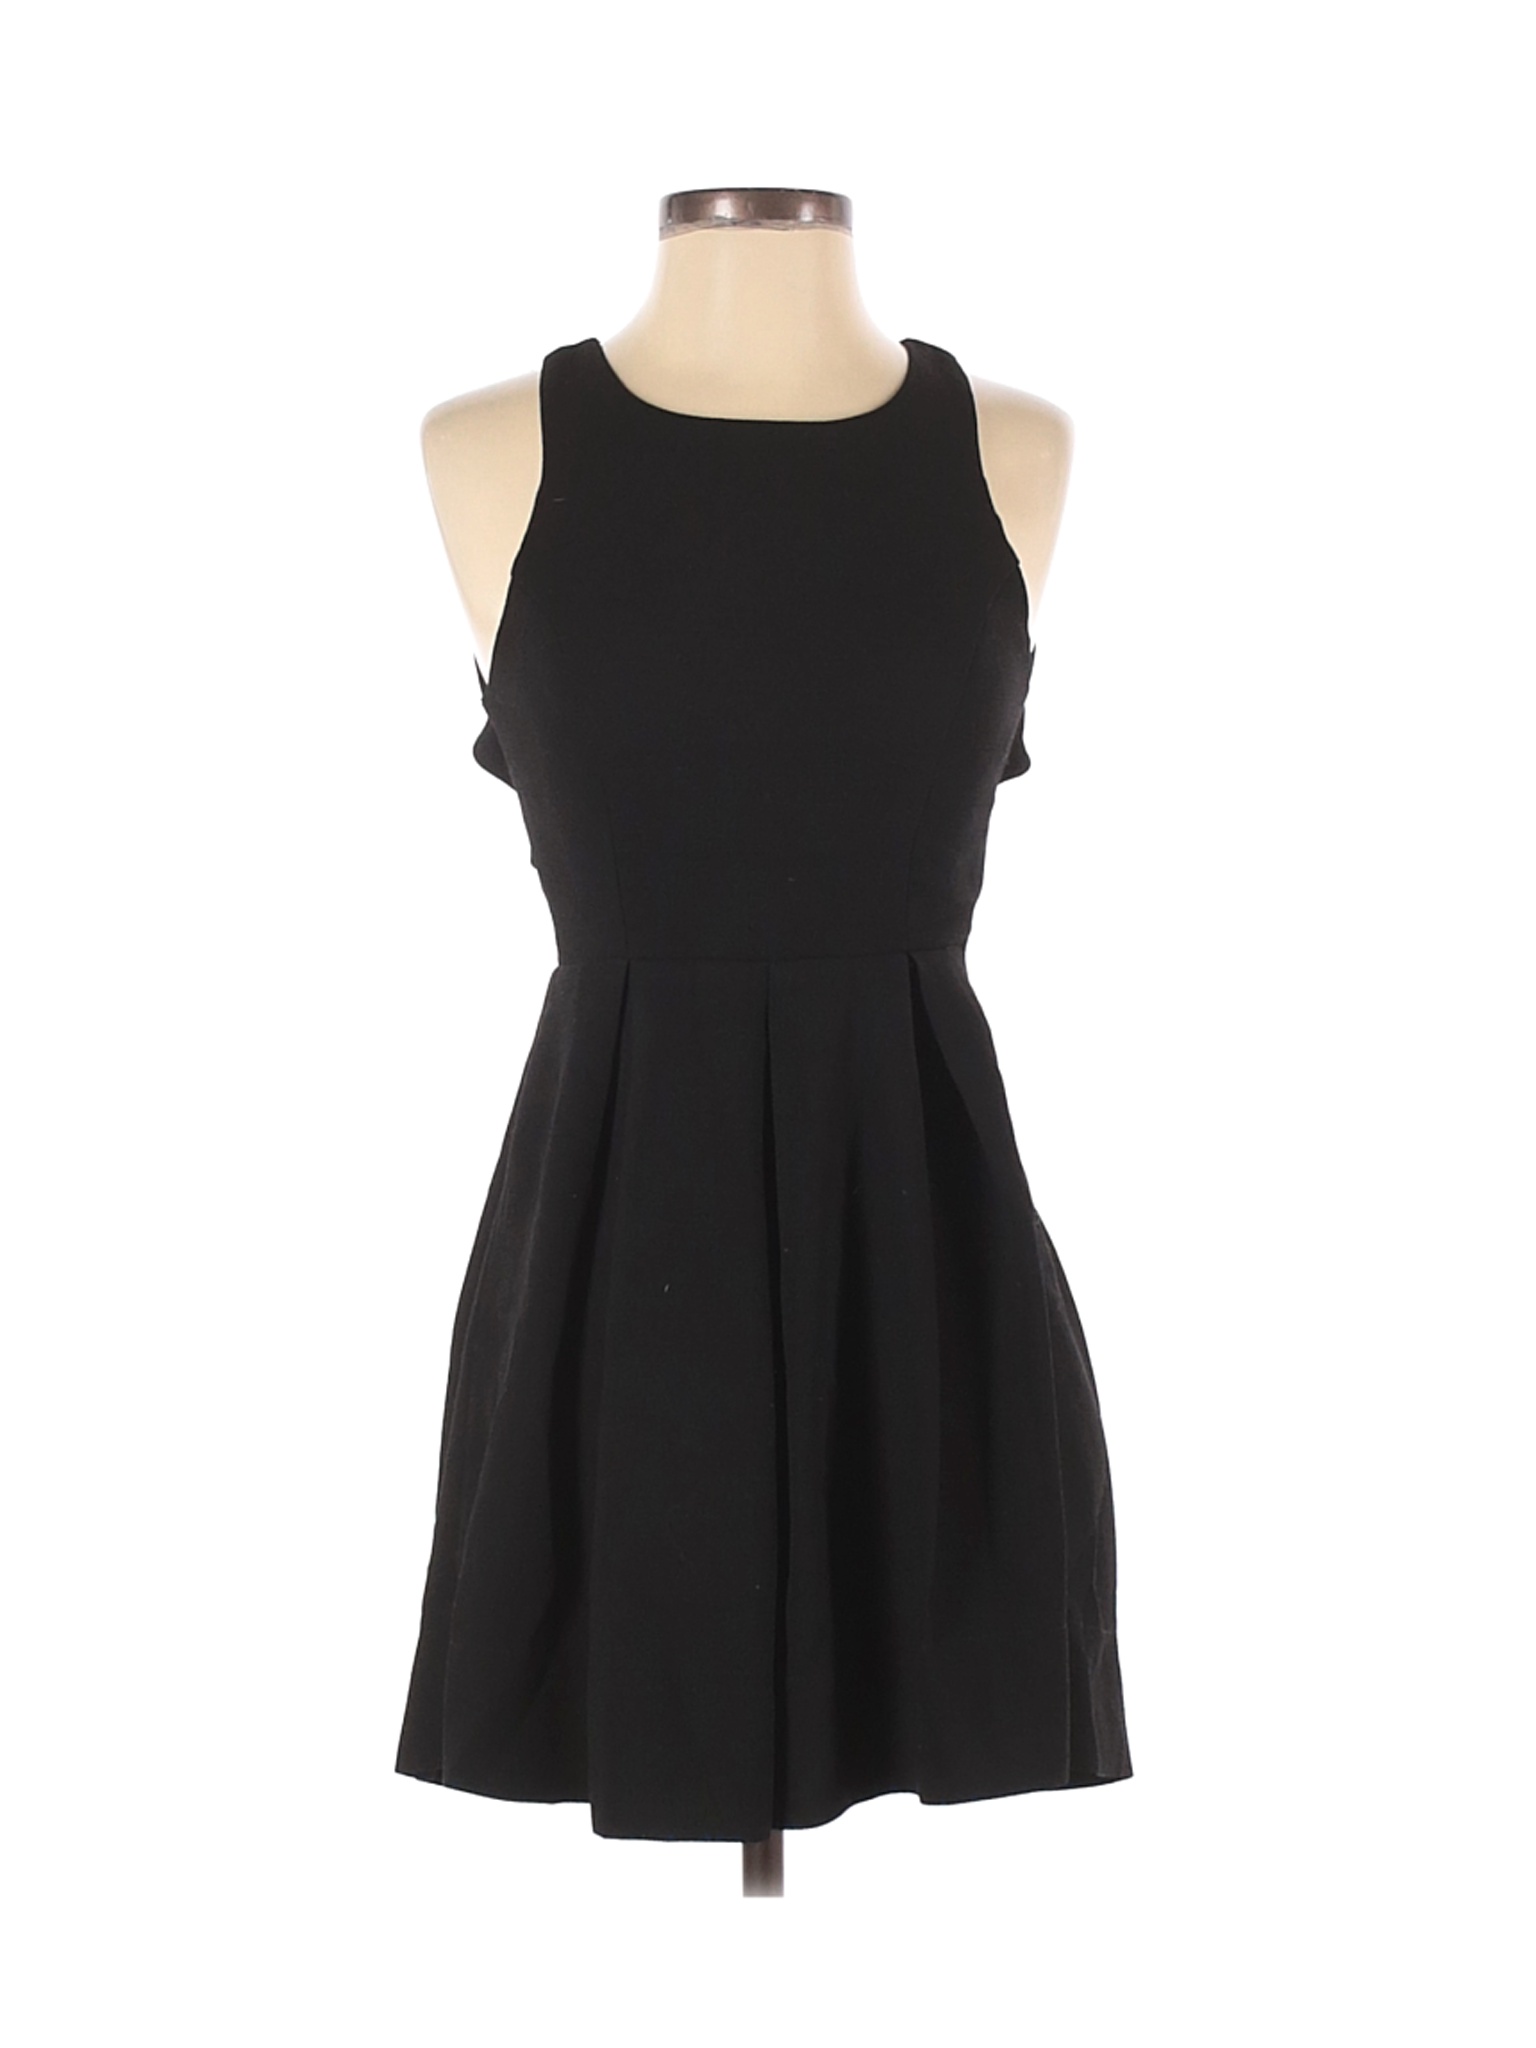 L'Atiste by Amy Women Black Cocktail Dress S | eBay